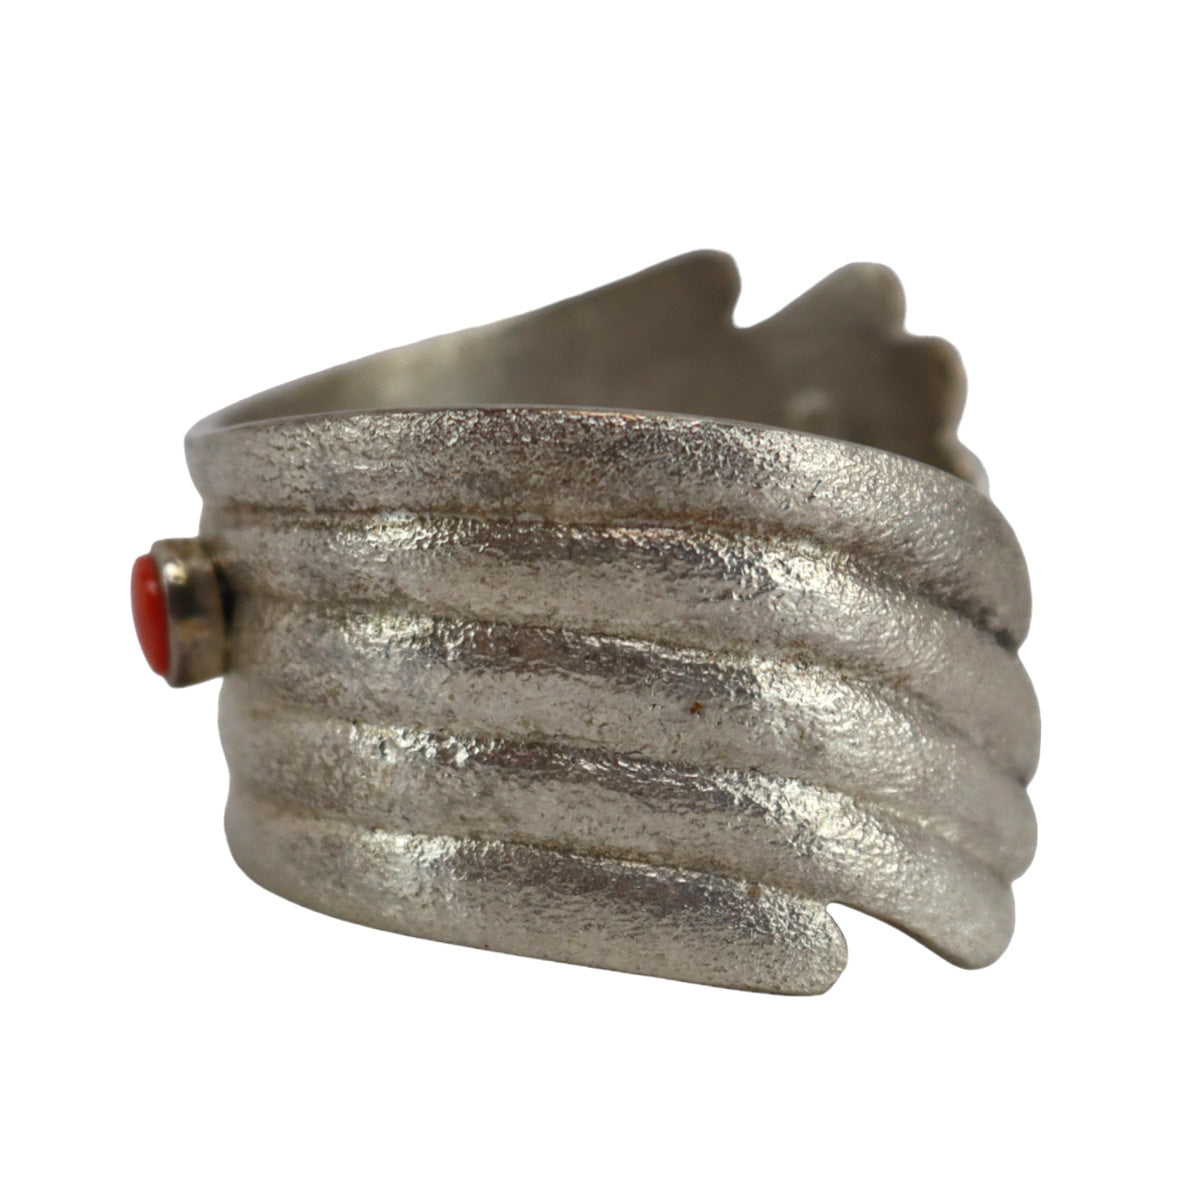 Rebecca Begay - Navajo - Coral and Sterling Silver Tufacast Asymmetrical Bracelet c. 2000s, size 6 (J16064-010)